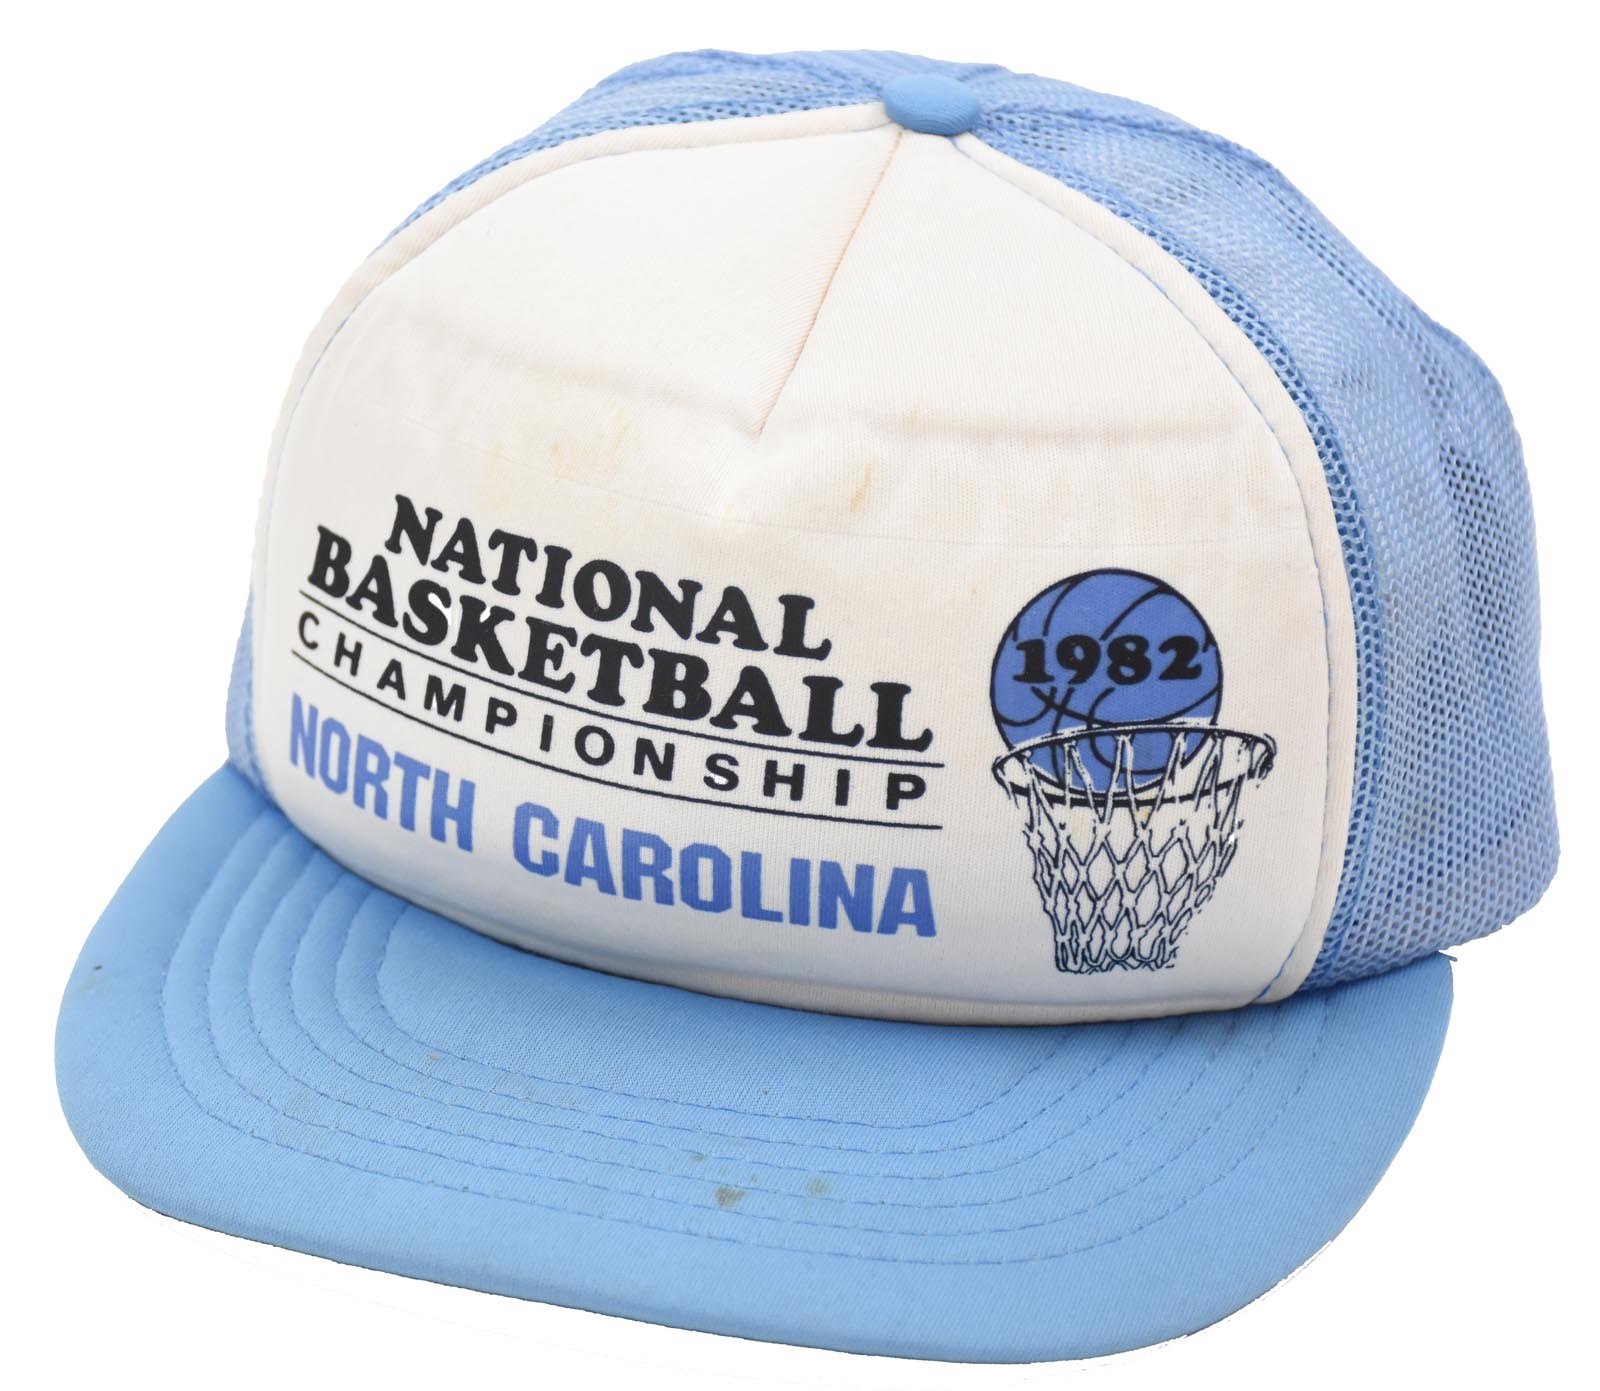 - 1982 Michael Jordan Vintage Signed North Carolina Basketball Cap